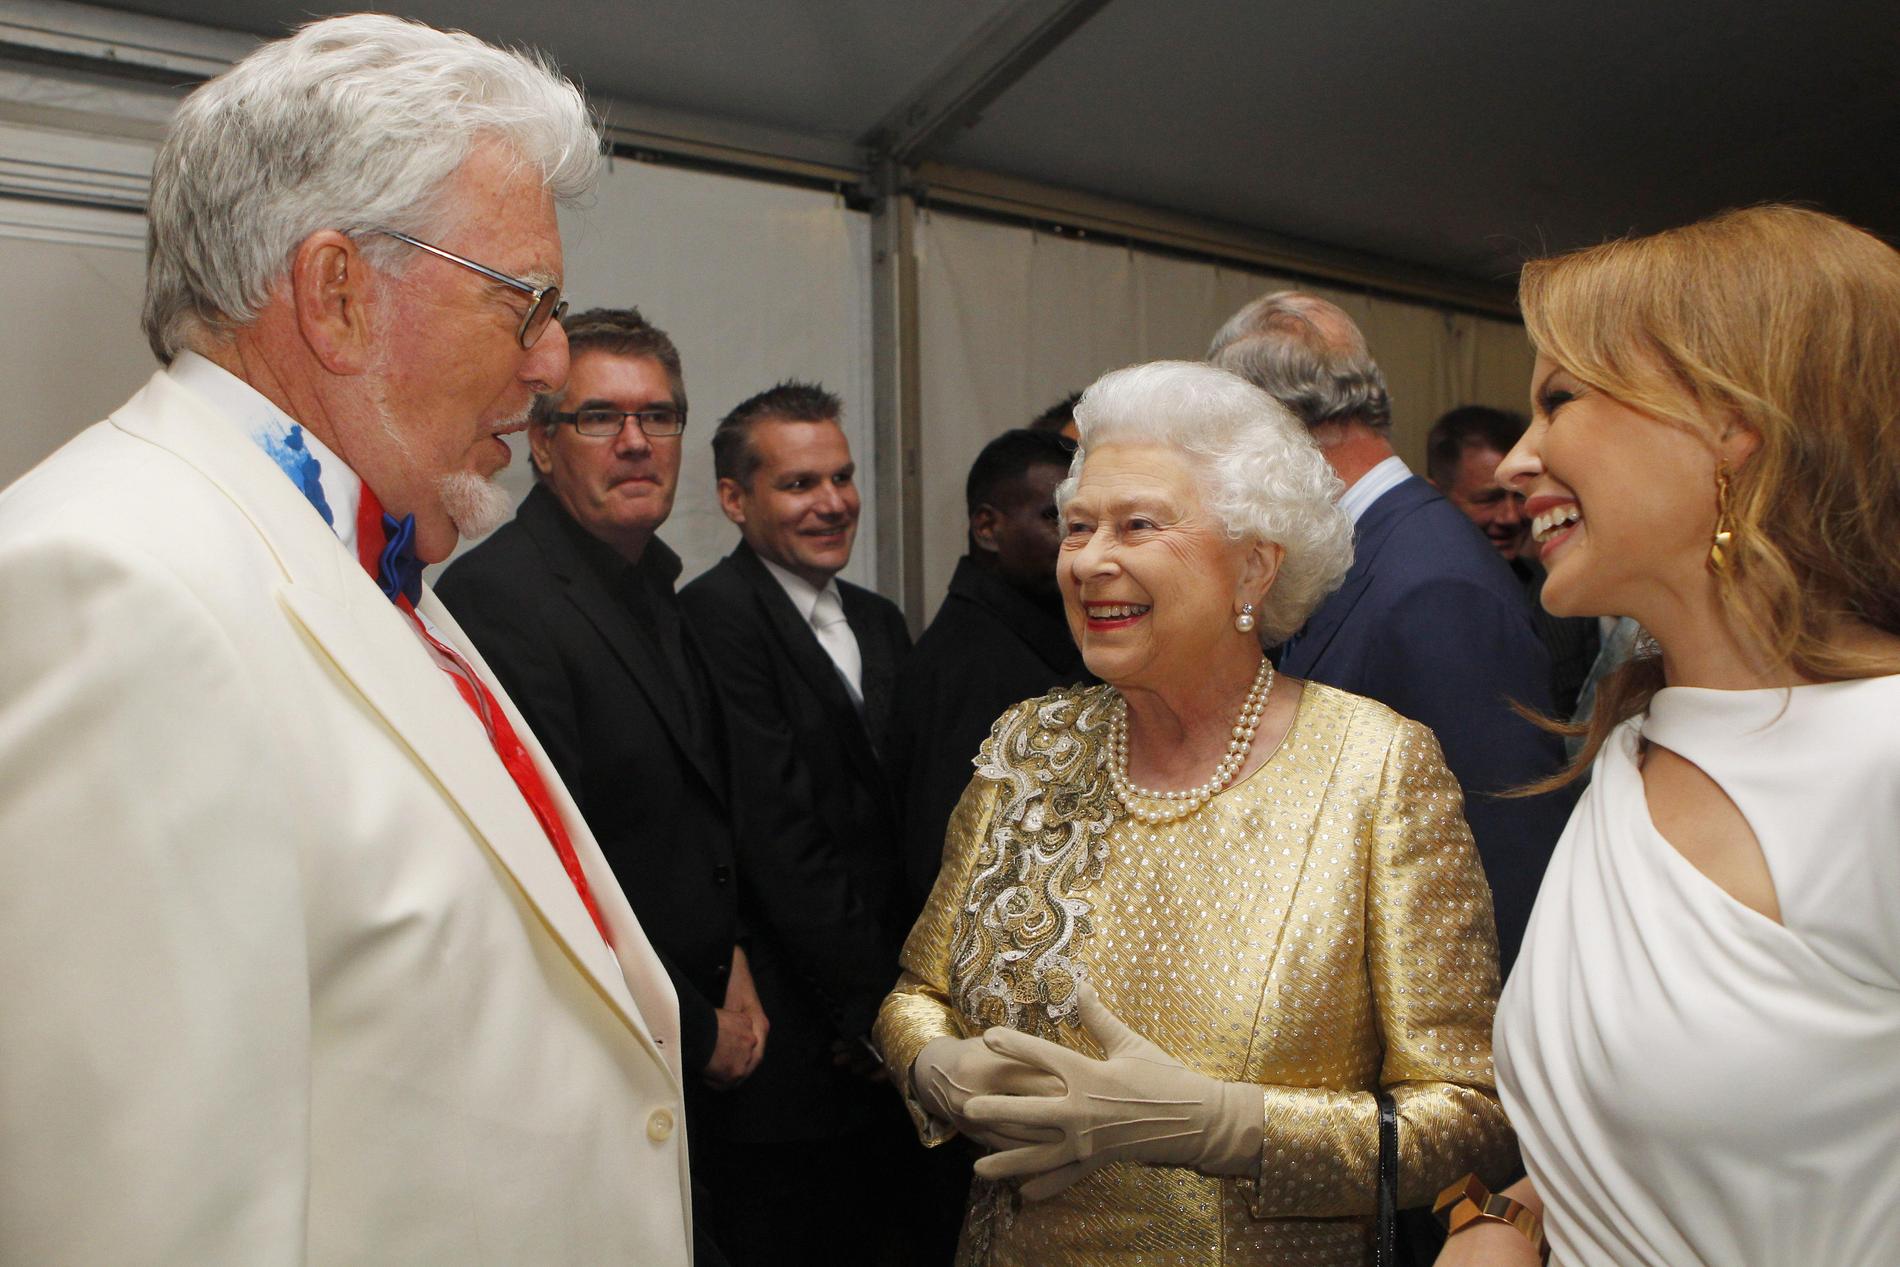 Drottning Elizabeth II möter Rolf Harris och Kylie Minogue backstage på The Diamond Jubilee Concert 2012. 